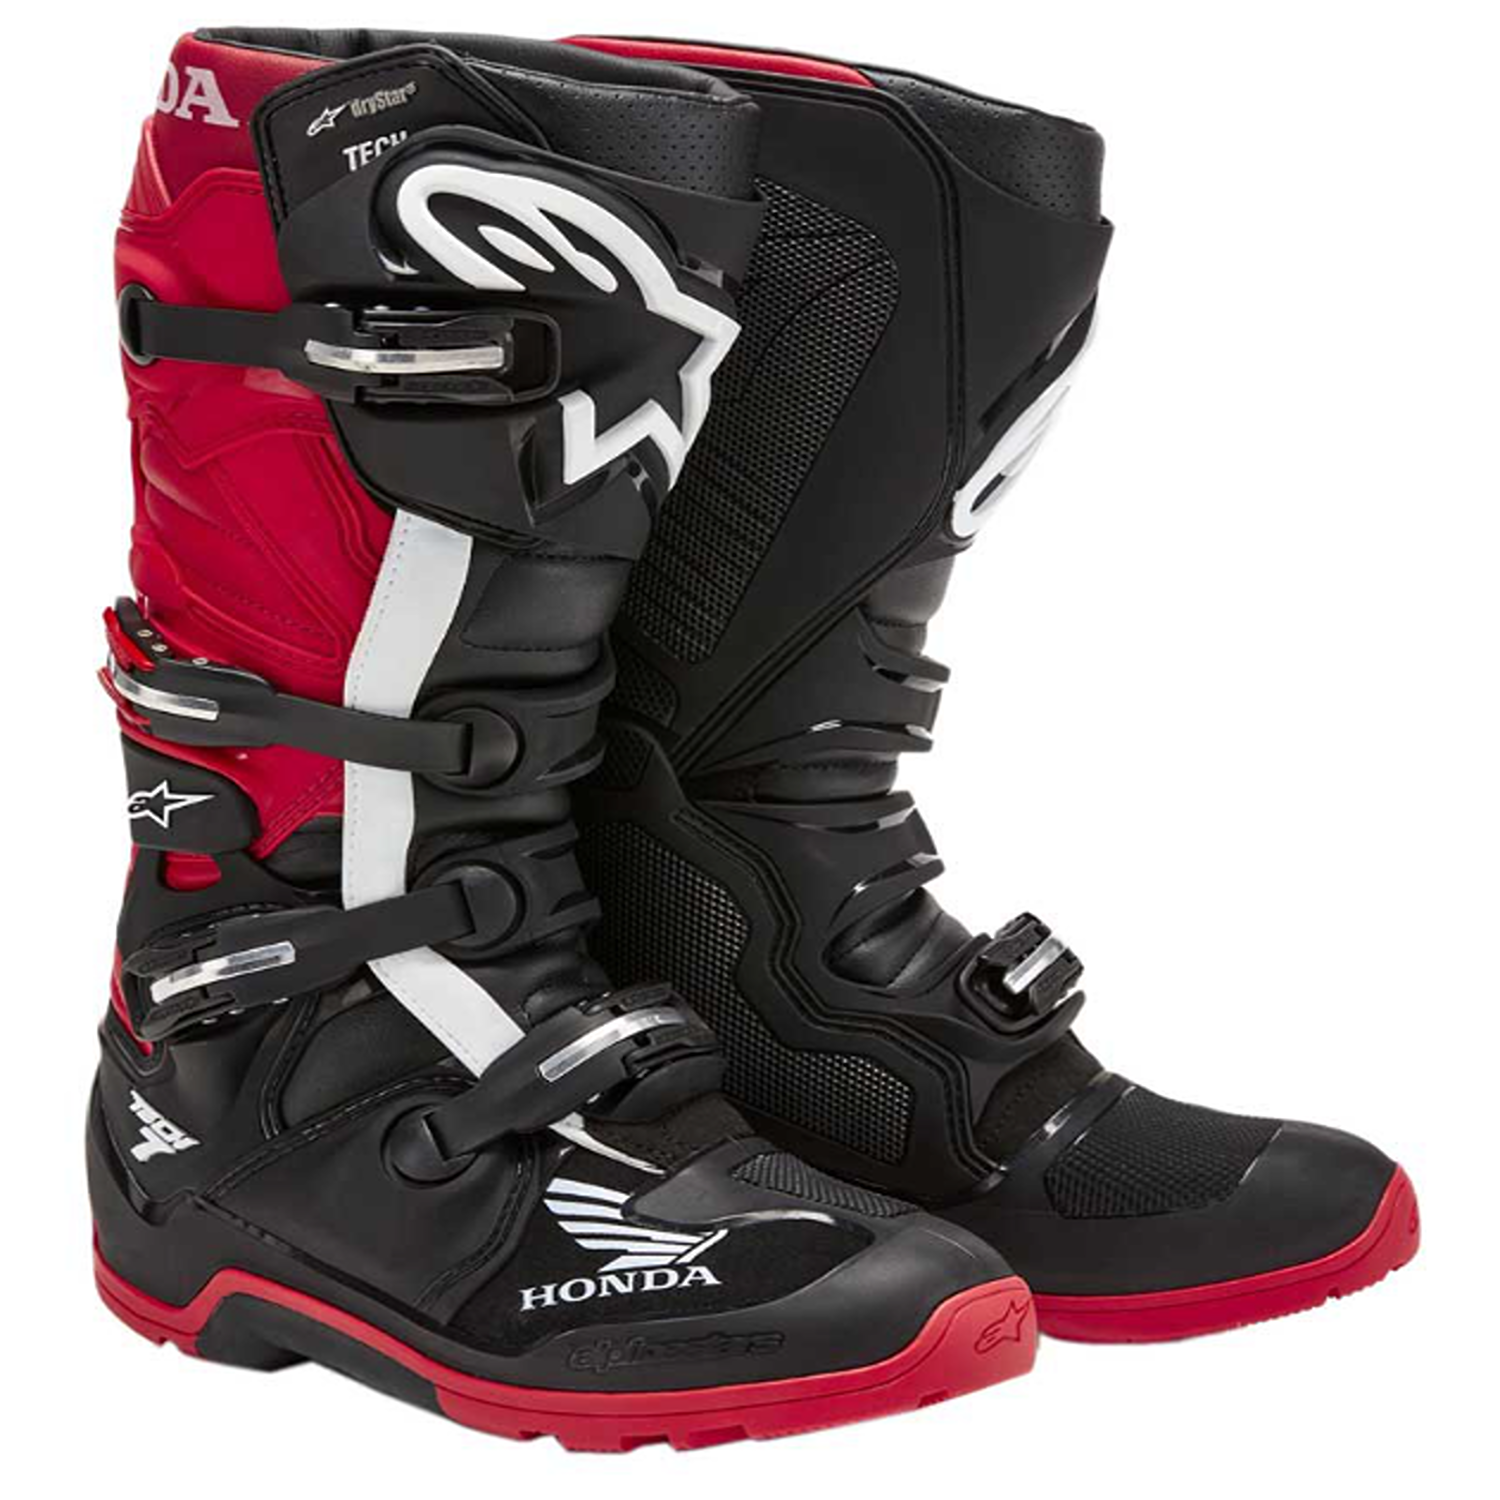 Image of Alpinestars Honda Tech 7 Enduro Drystar Boots Black Bright Red Taille US 6